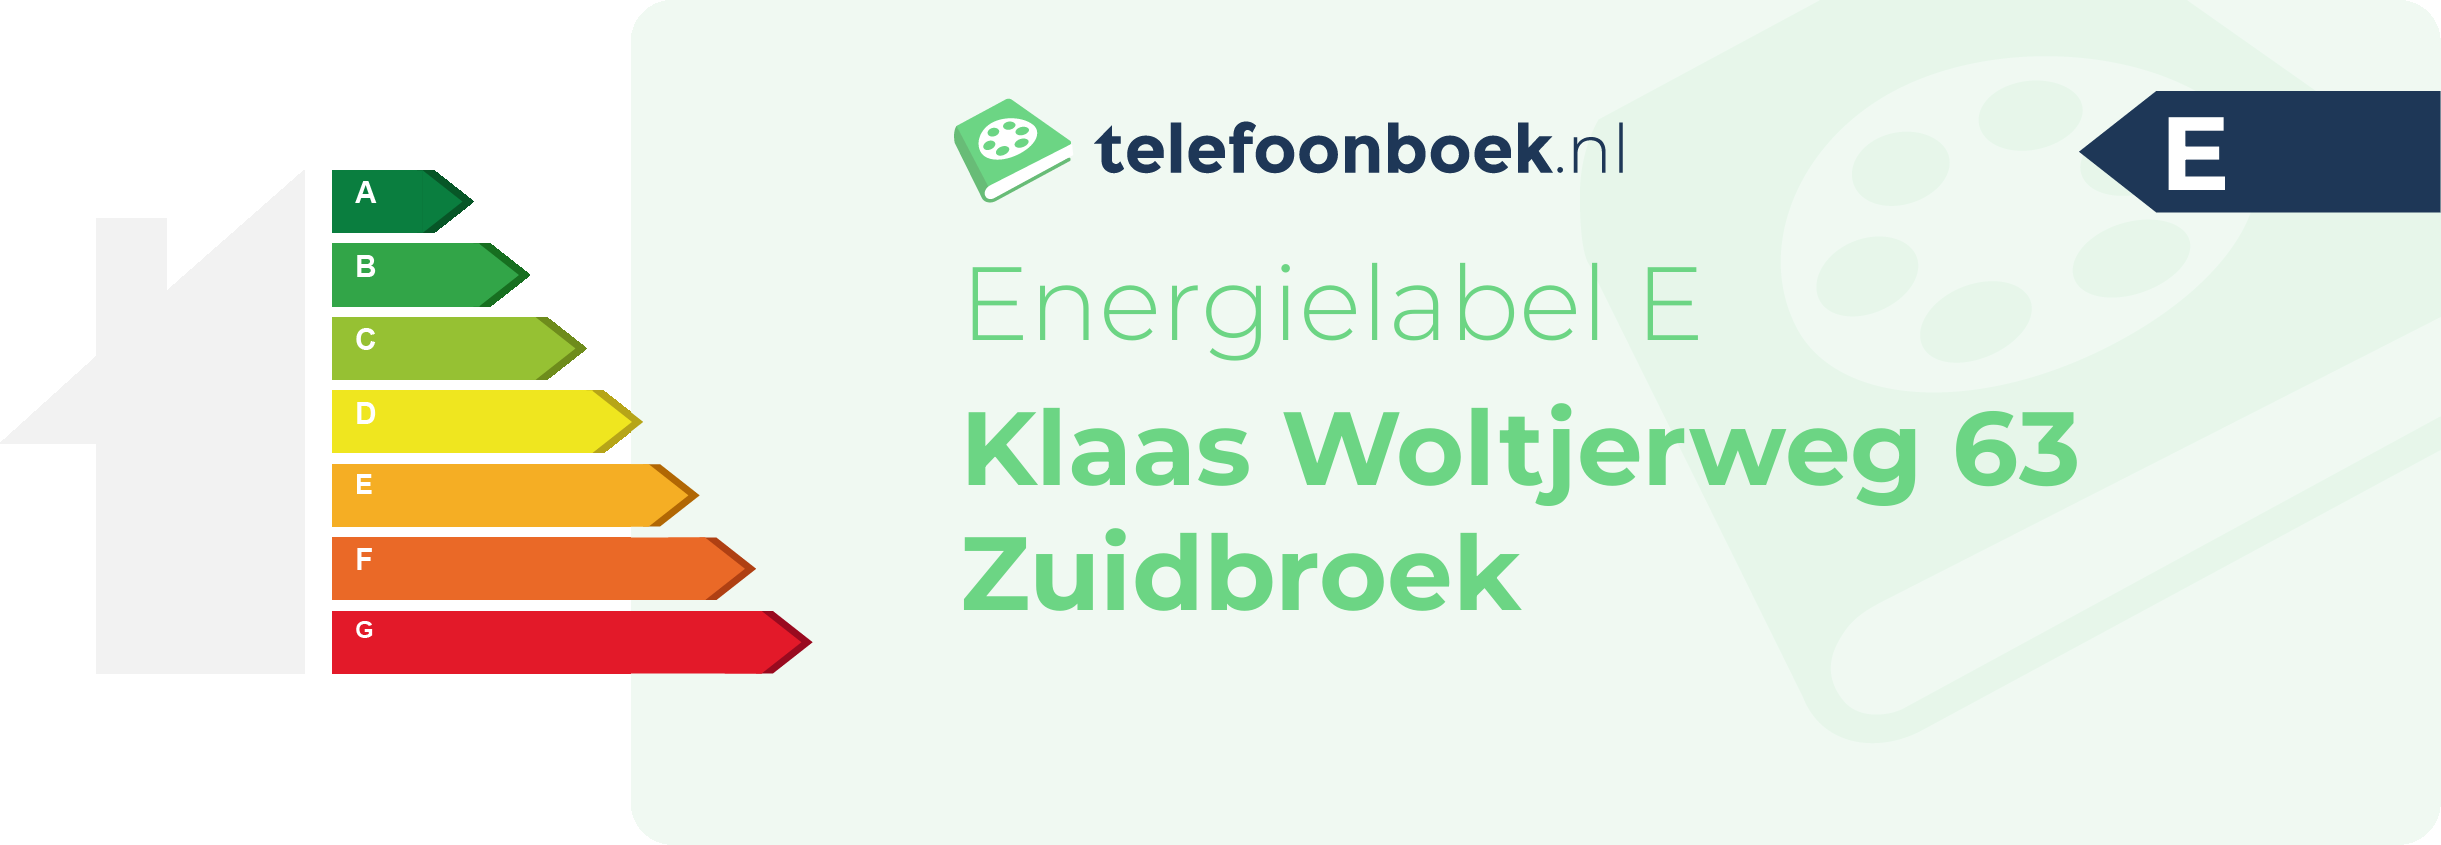 Energielabel Klaas Woltjerweg 63 Zuidbroek